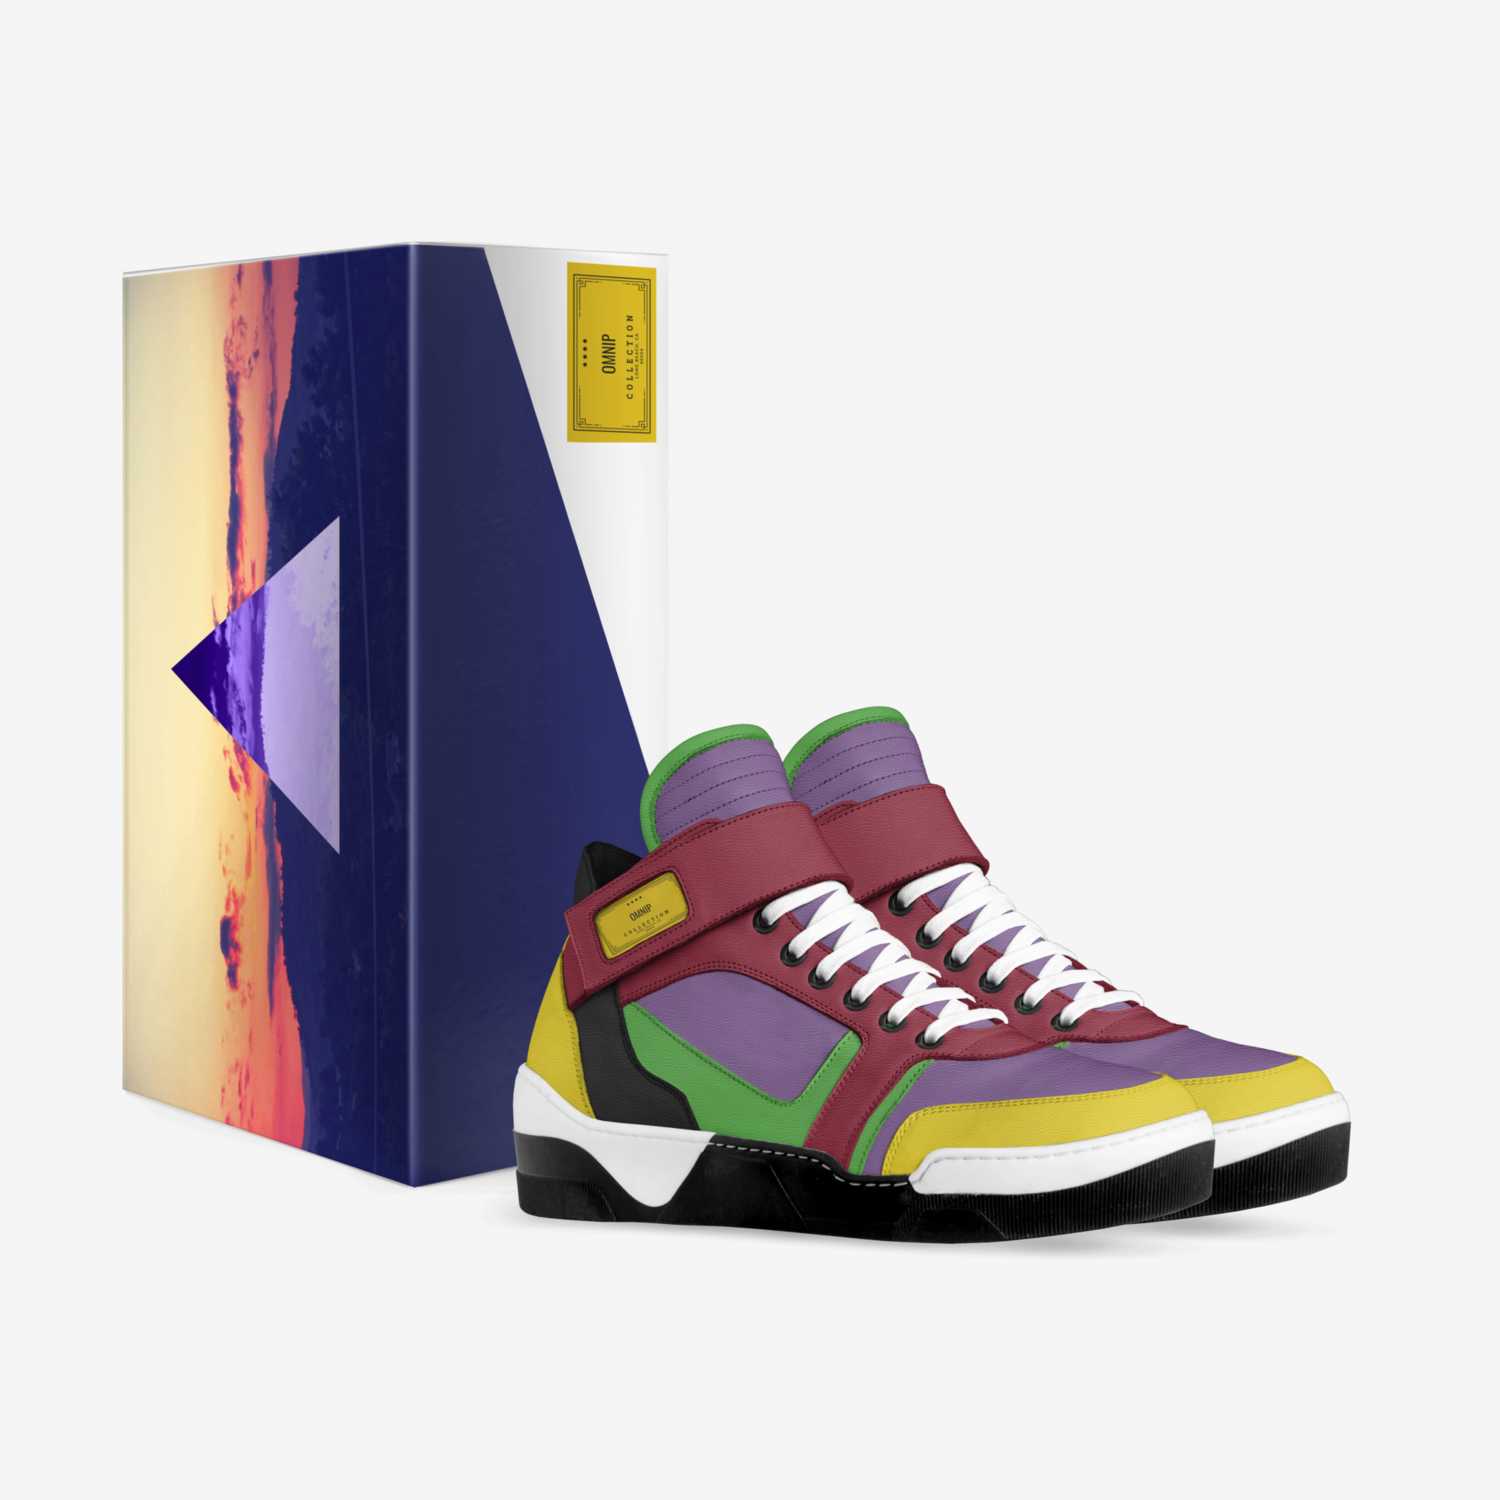 OMNIP | A Custom Shoe concept by Arthur Simon